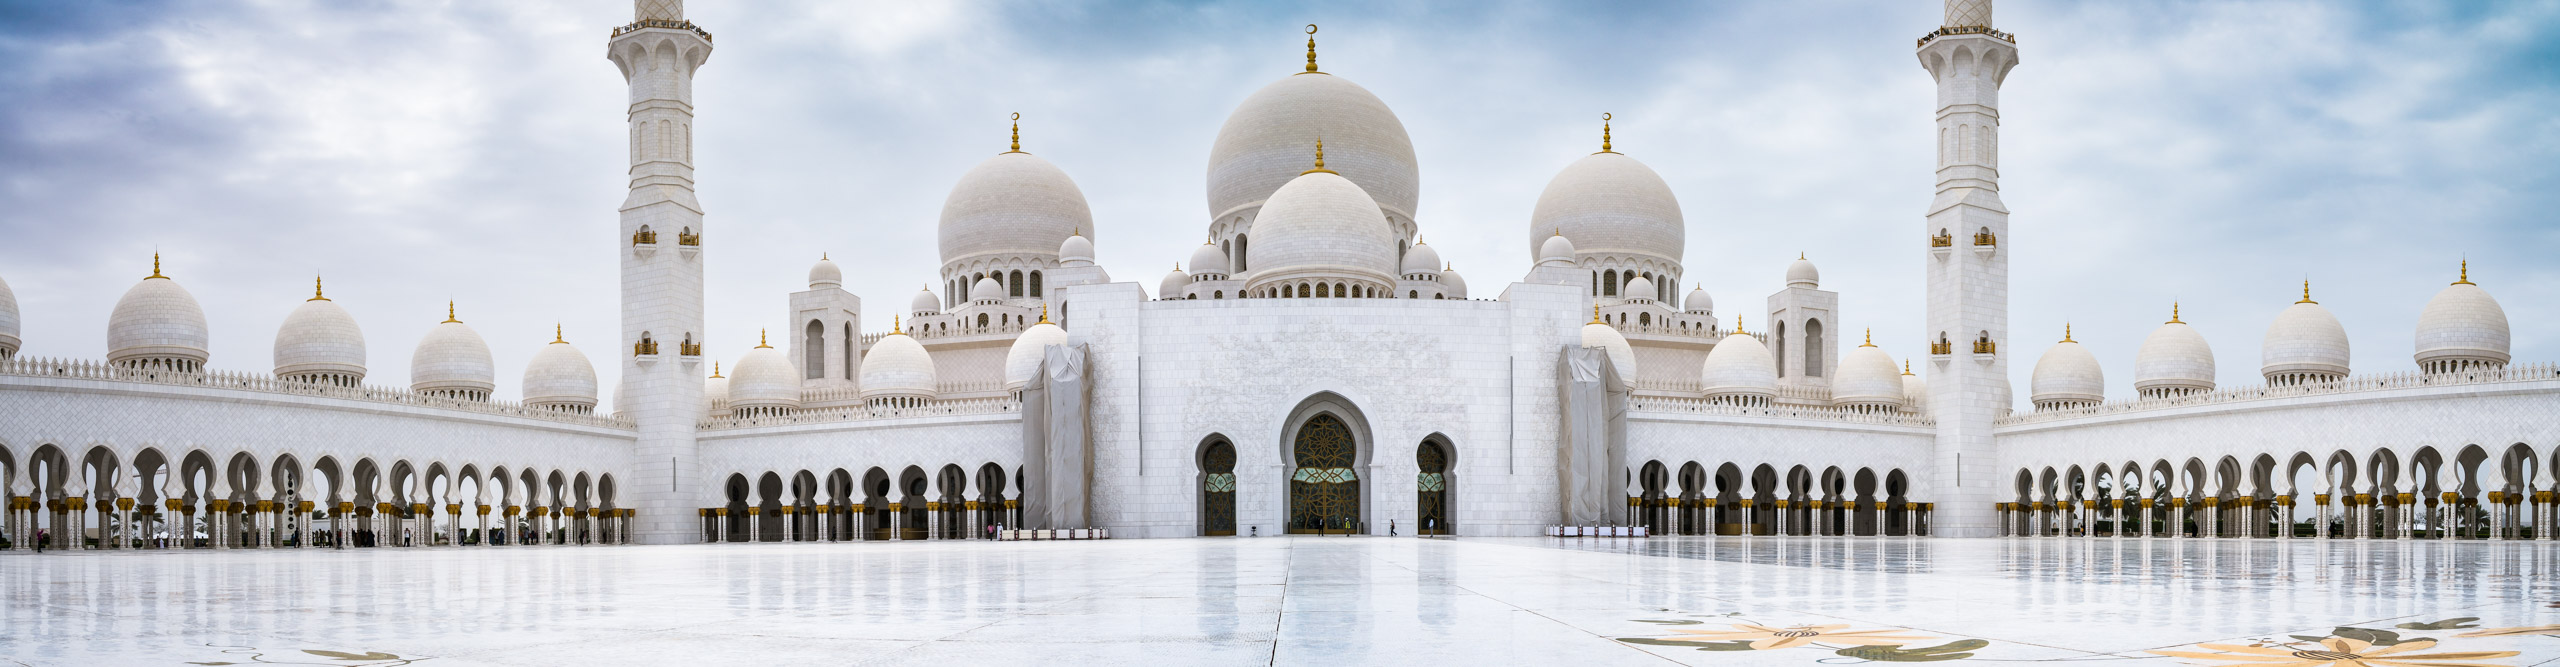 The beautiful white Sheikh Zayed Mosque, Grand Mosque, Abu Dhabi